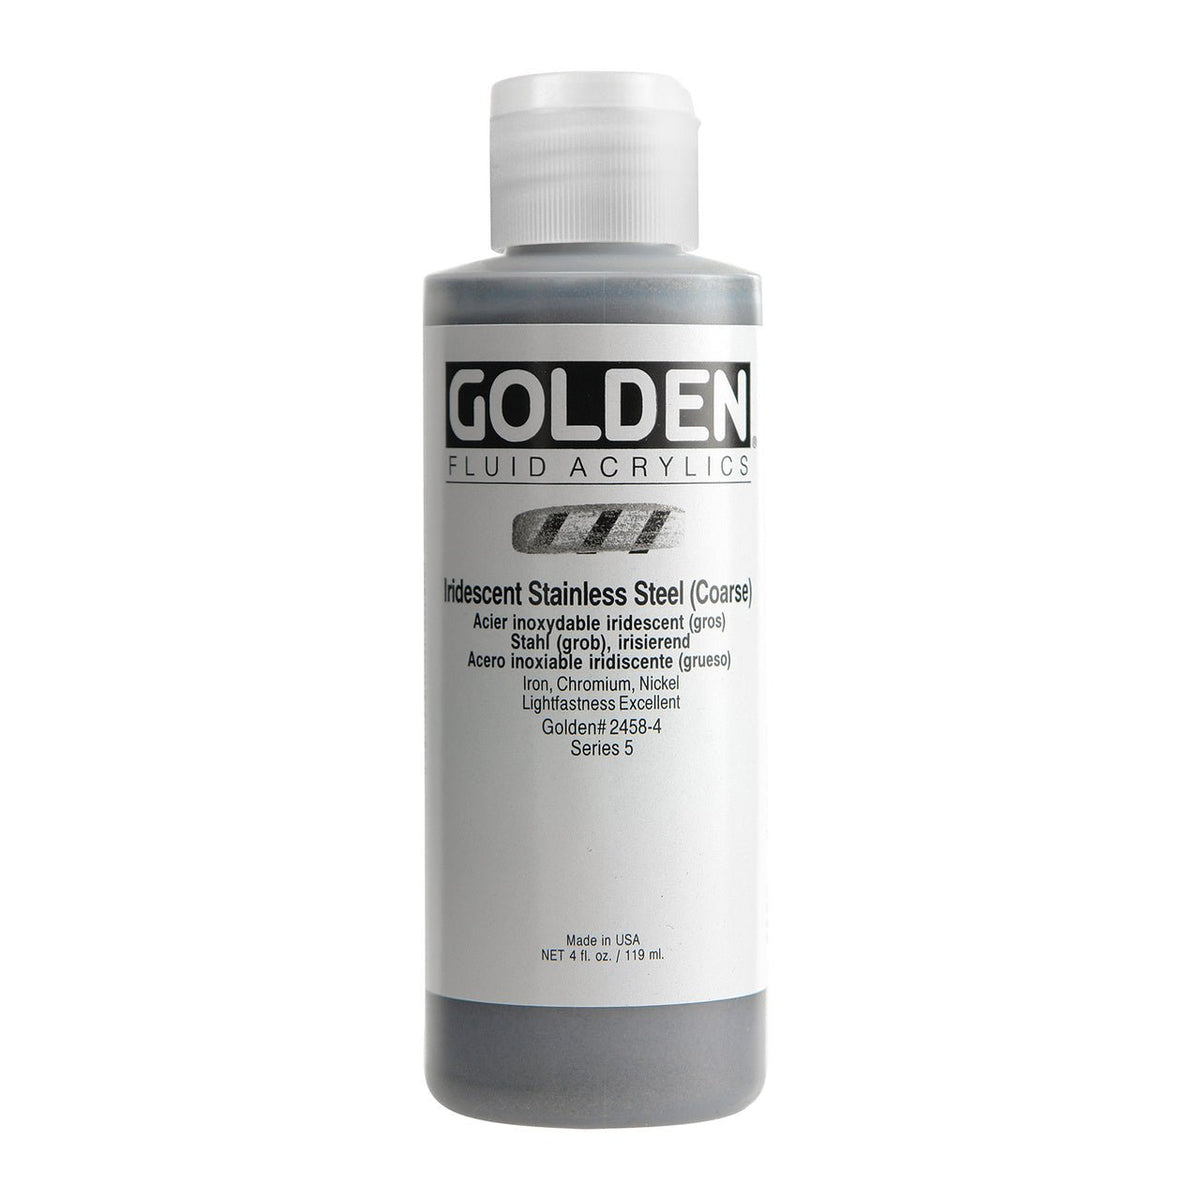 Golden Fluid Acrylic Iridescent Stainless Steel 4 oz - merriartist.com